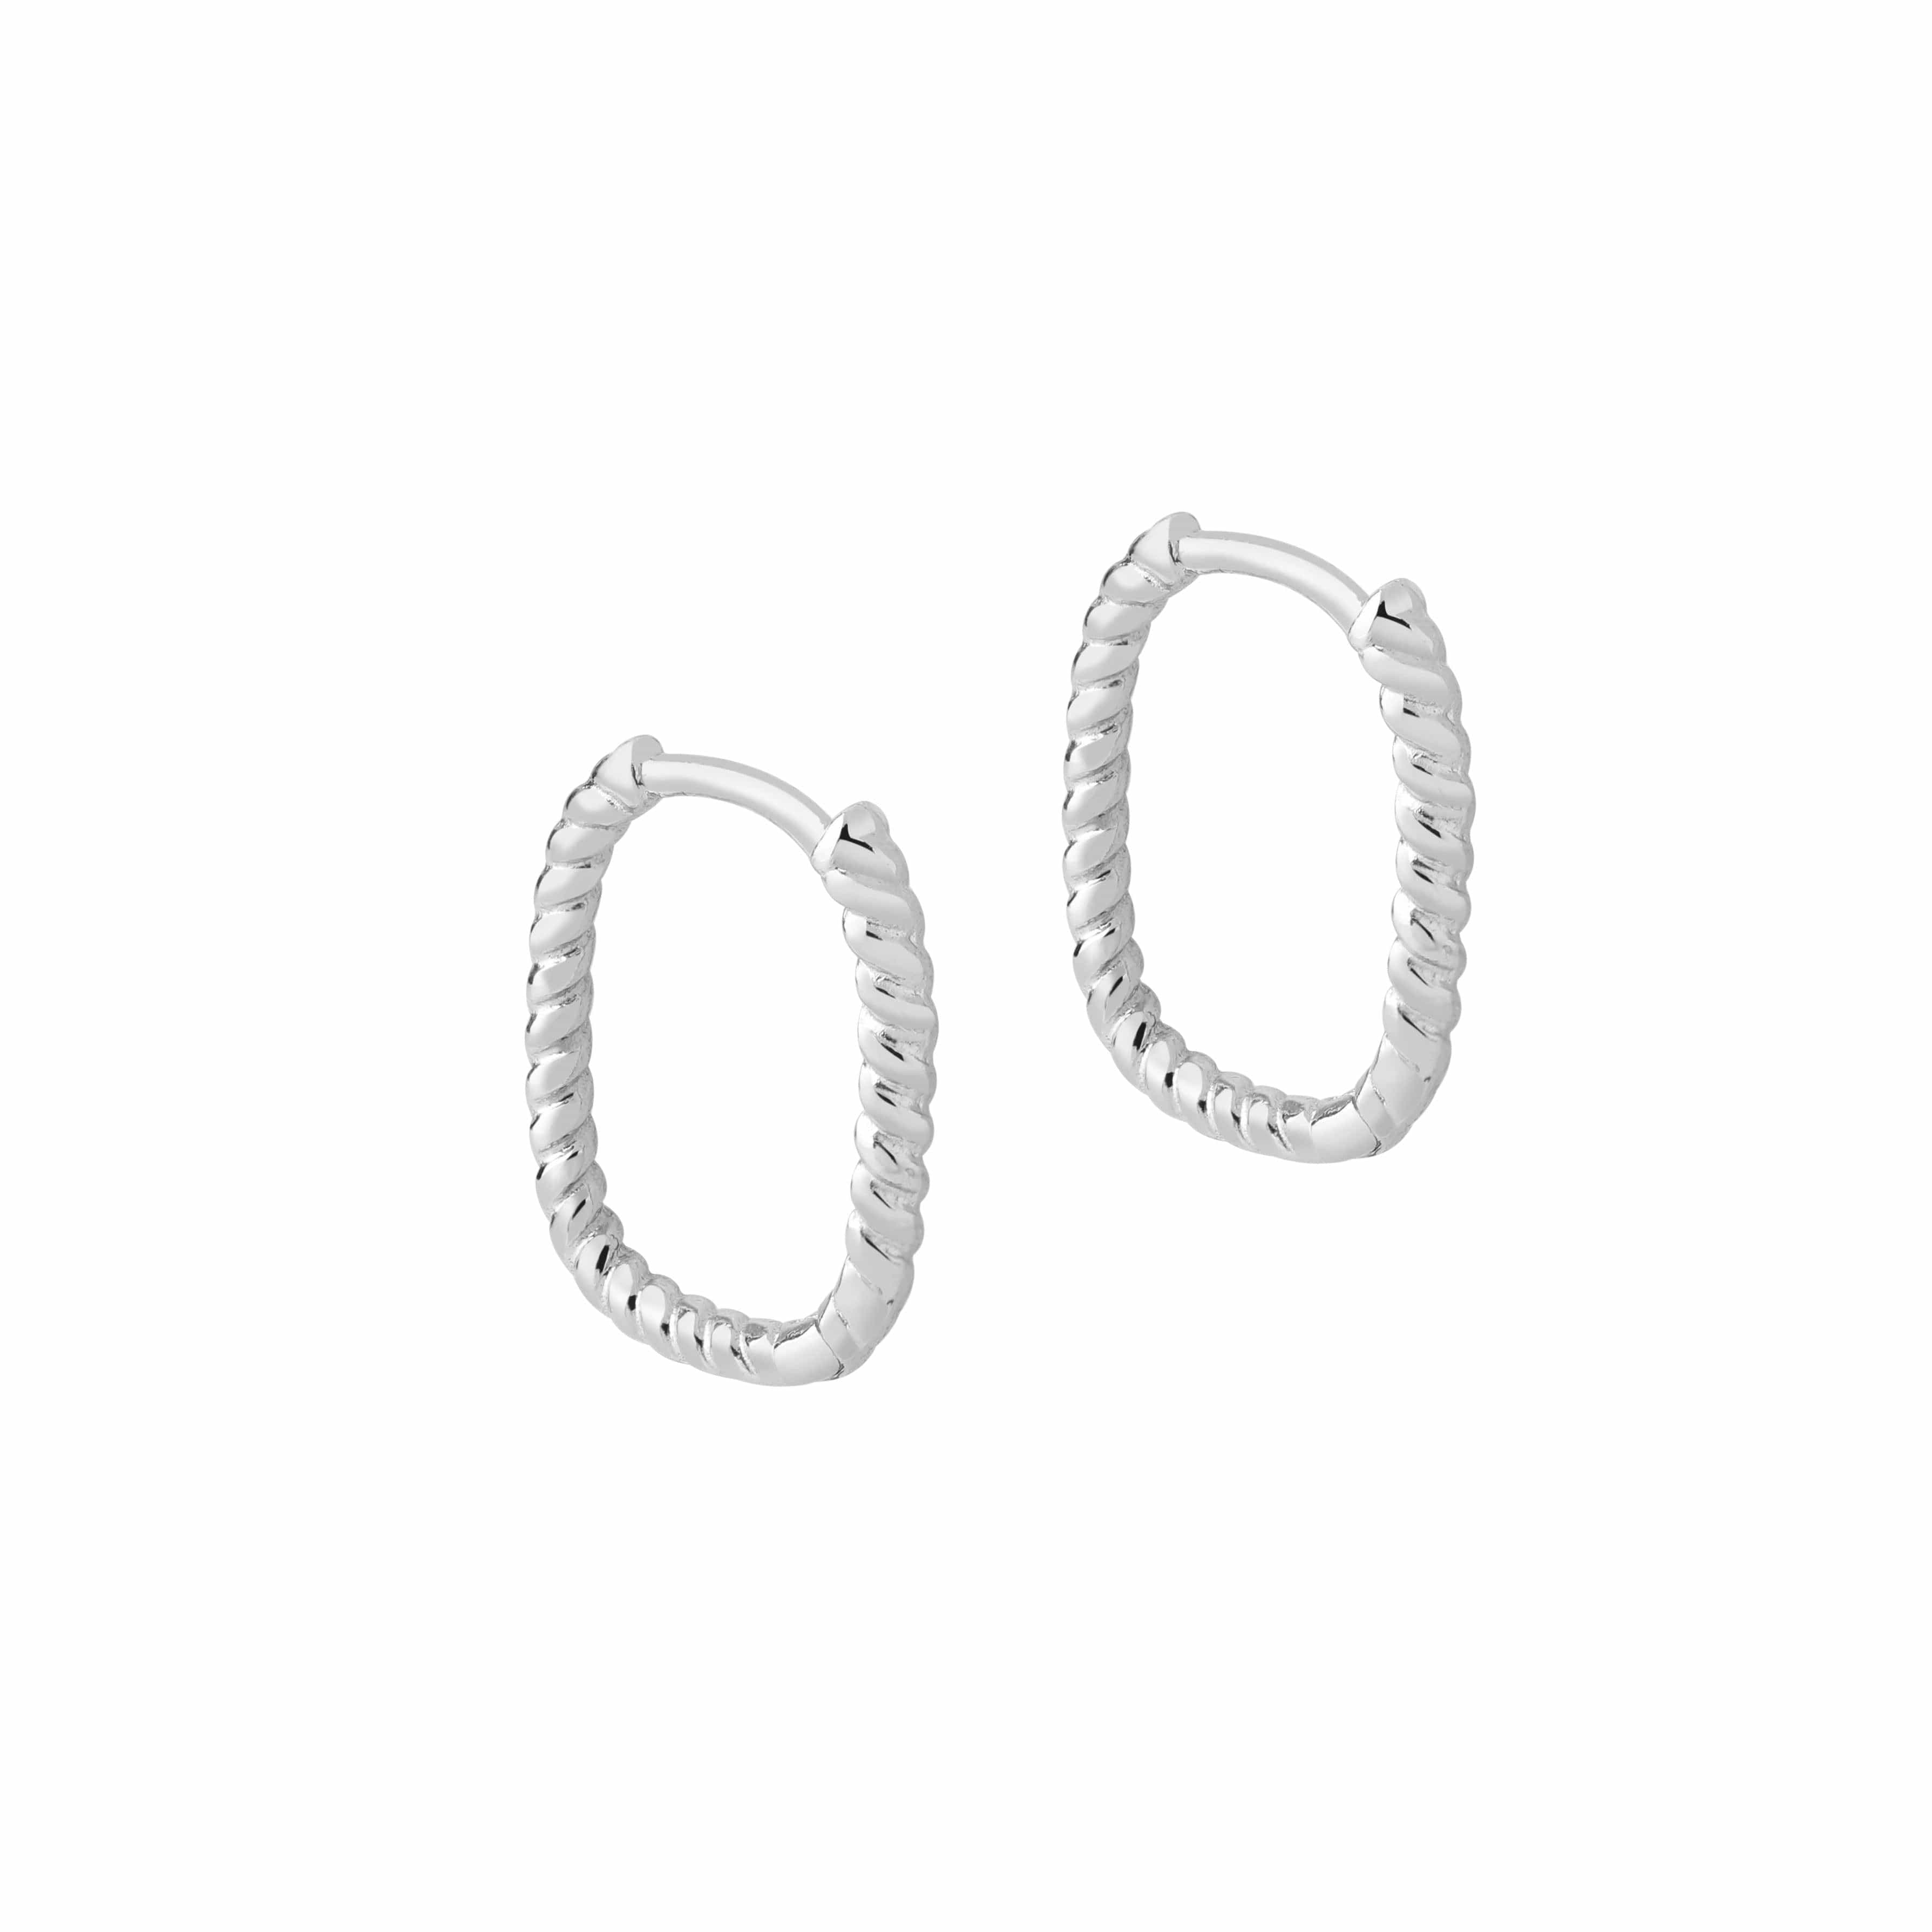 Rope Square Hoop Huggie Earrings Silver, oorringen met touw motief zilver